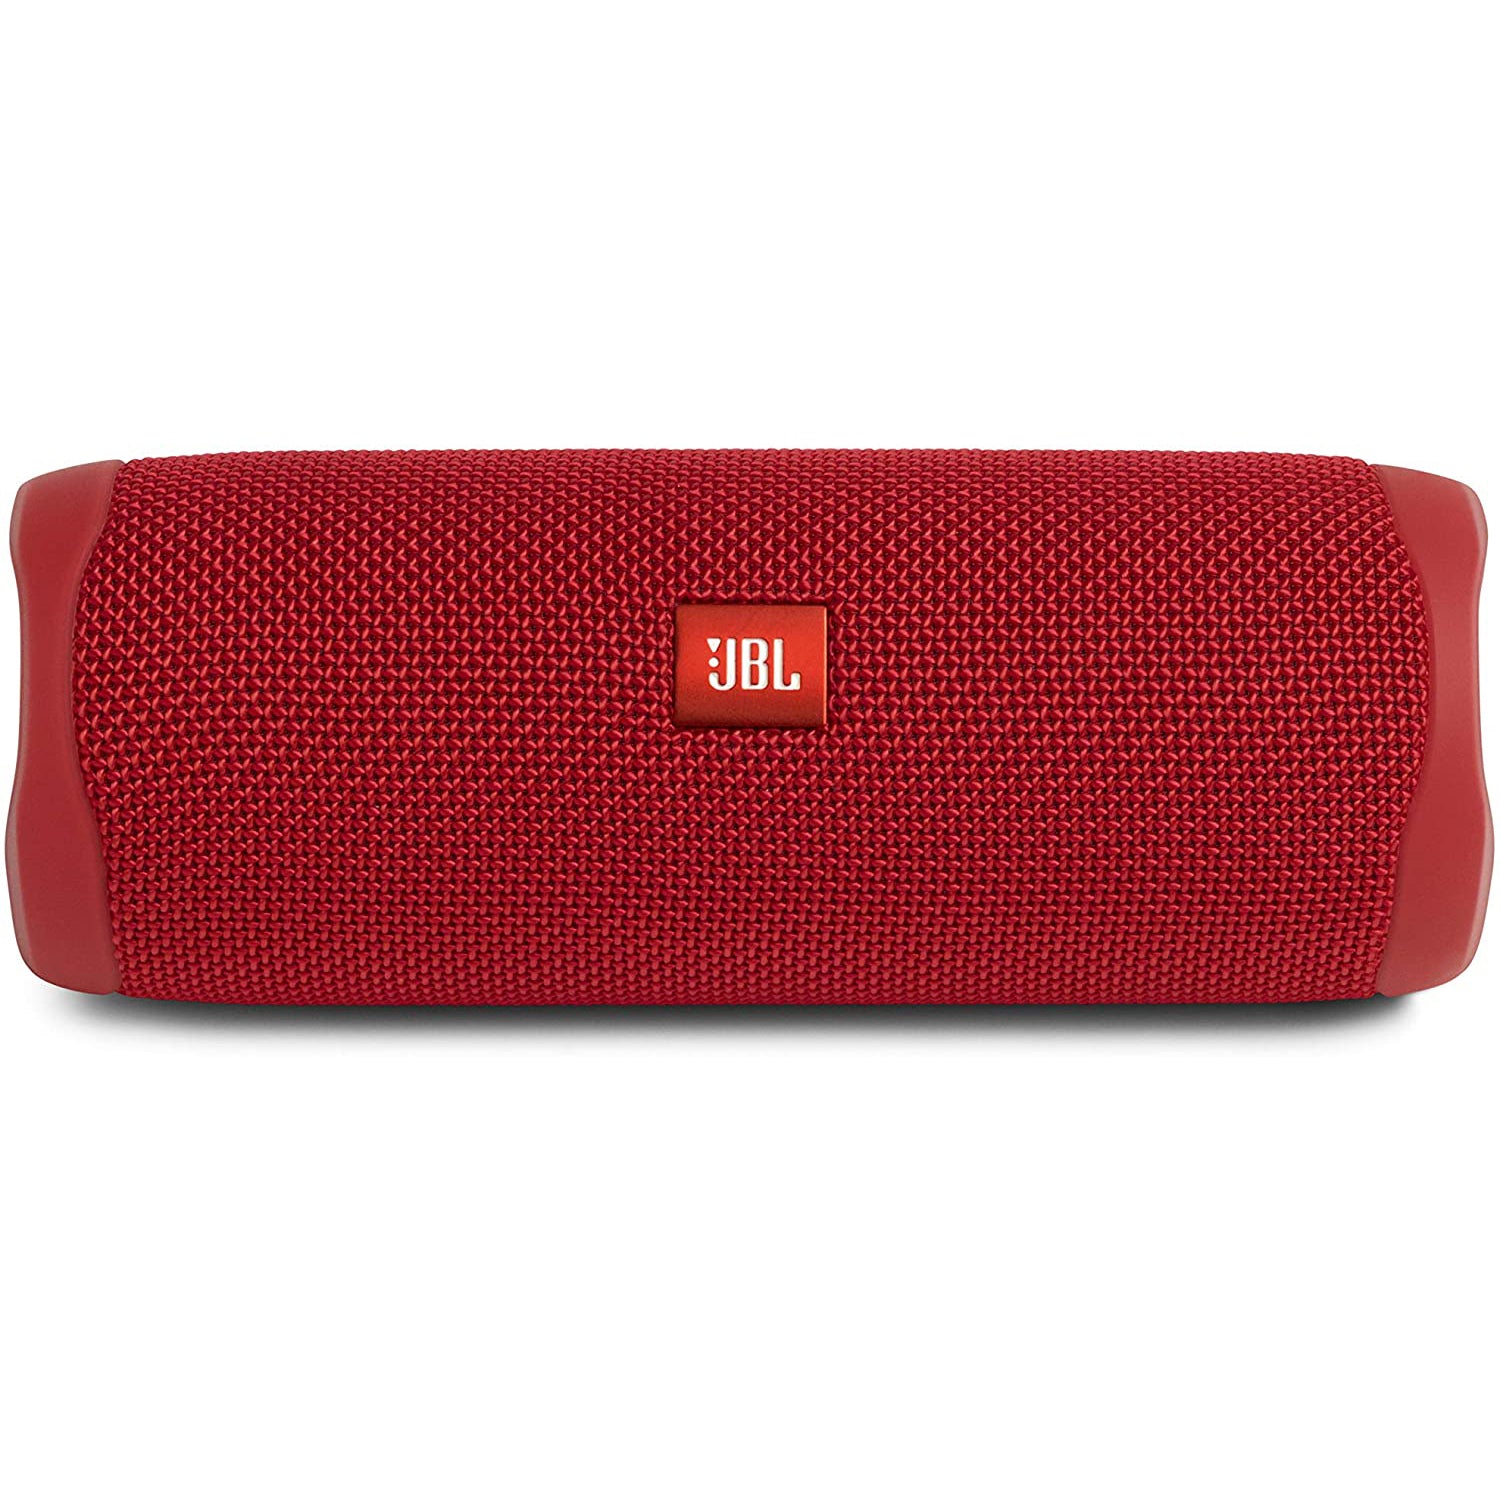 JBL Flip 5 Waterproof Wireless Portable Bluetooth Speaker - GG - Red (Refurbished)